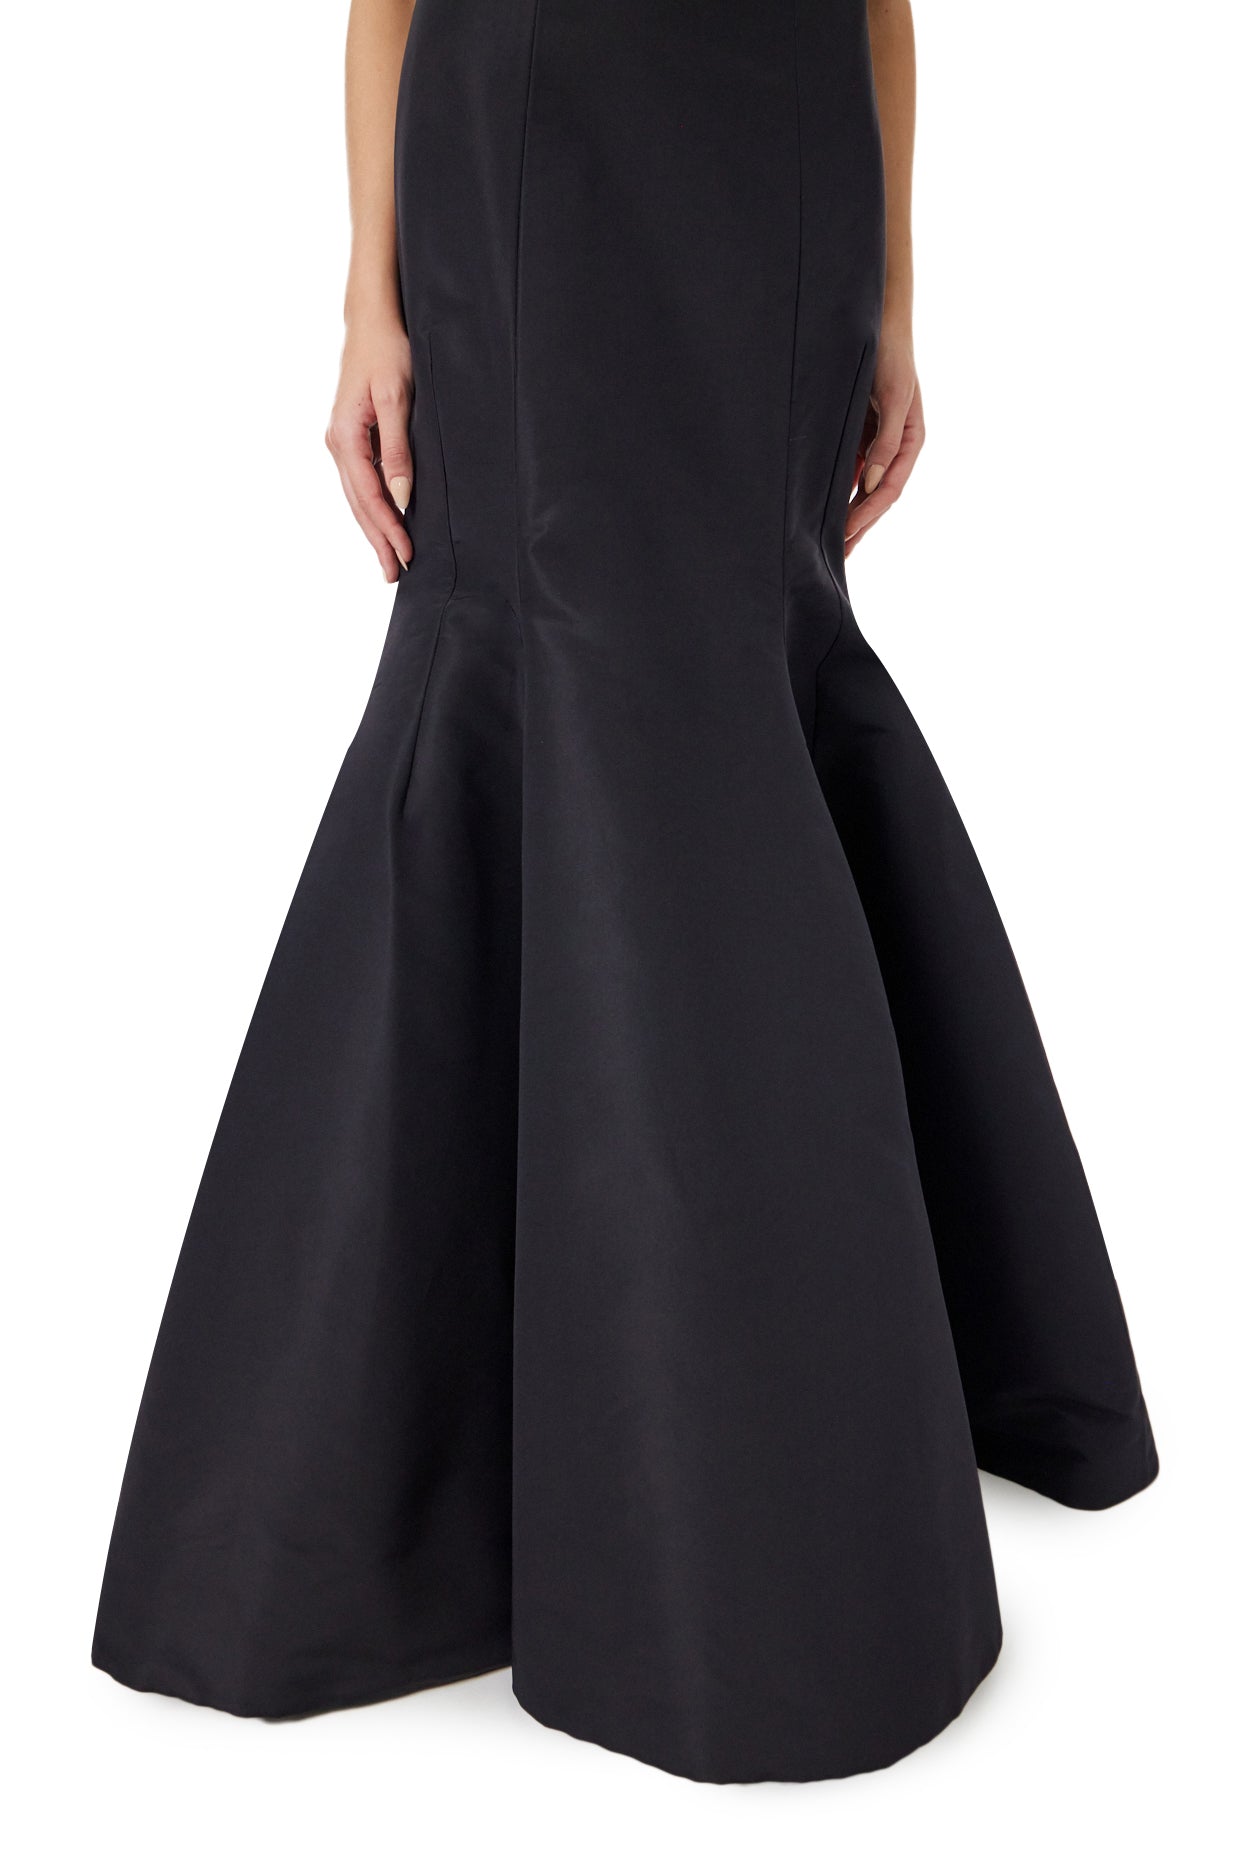 Monique Lhuillier black silk faille strapless gown with mermaid skirt.